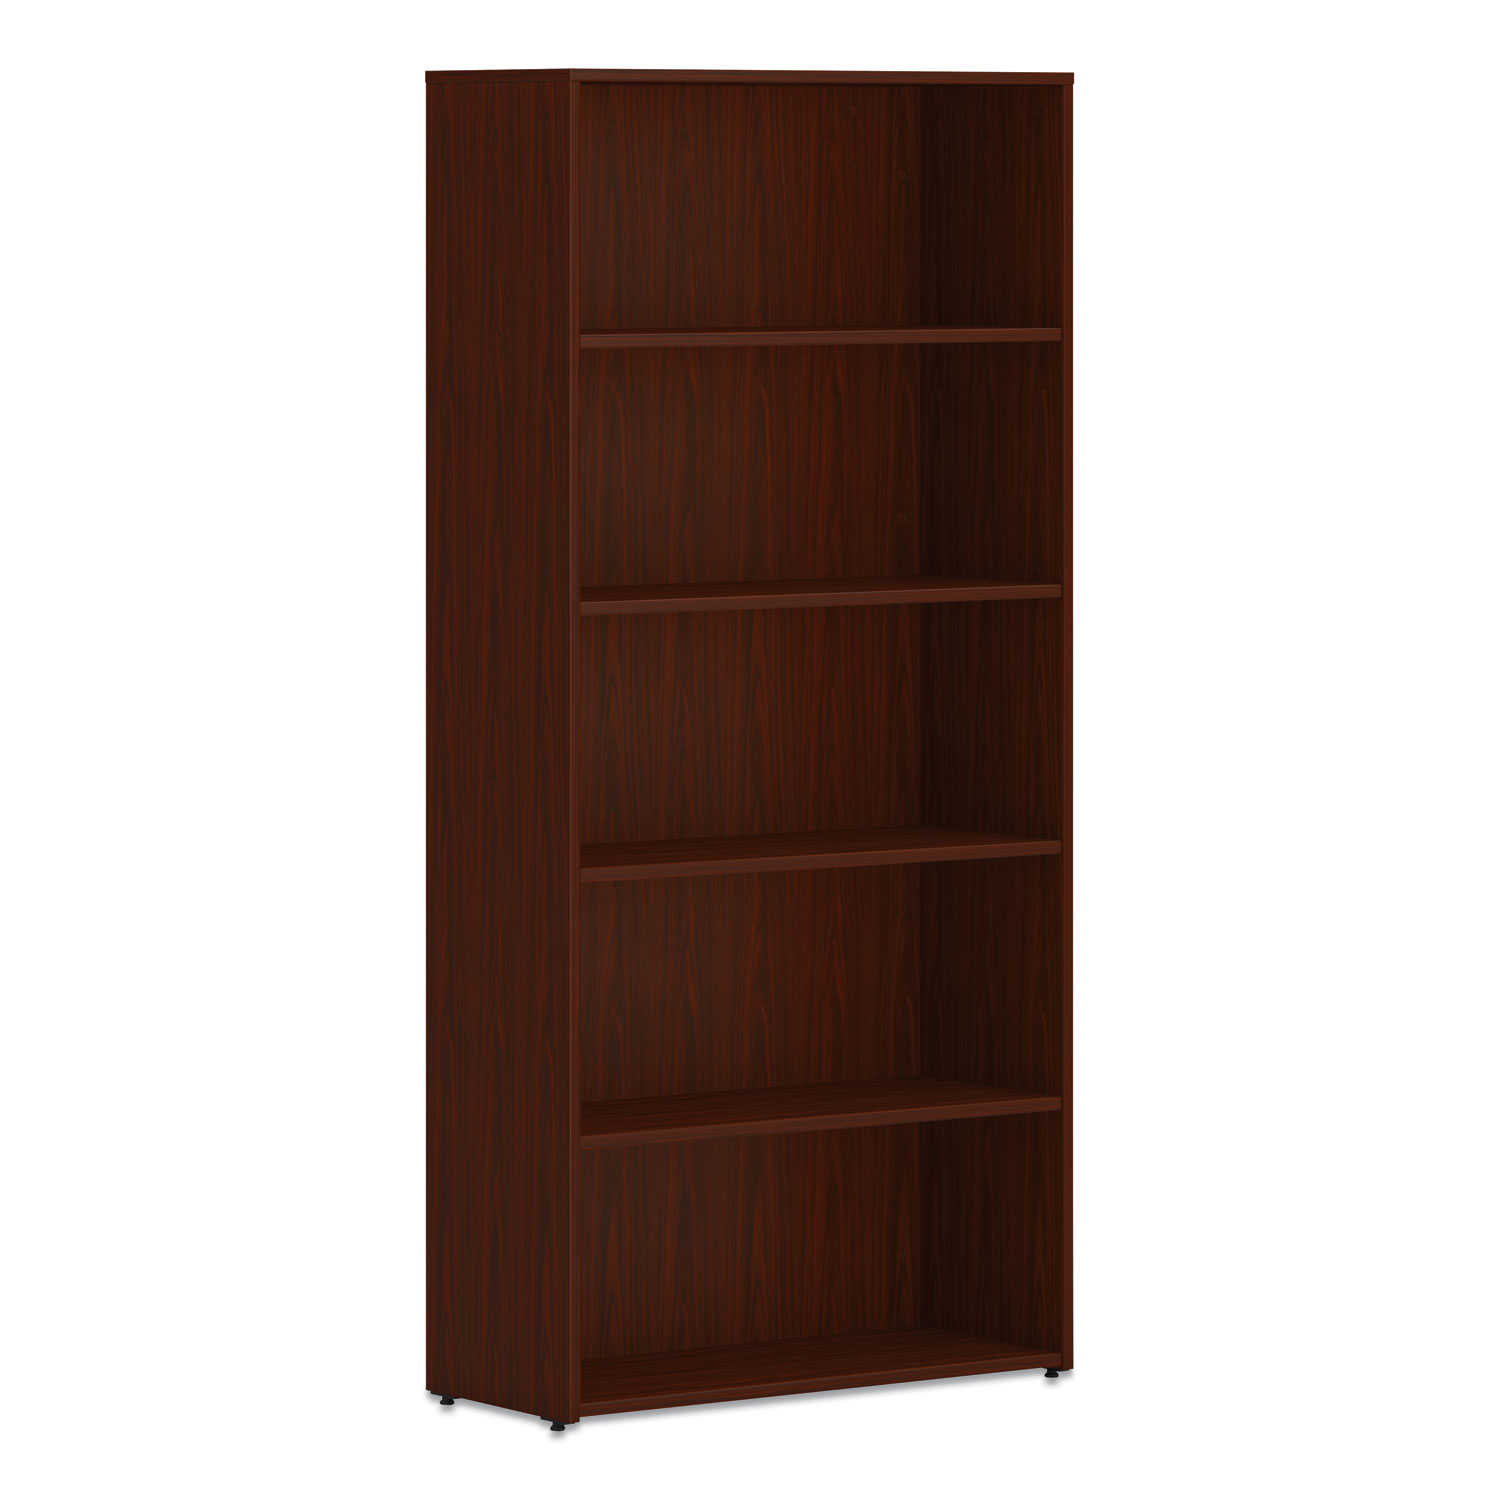  HON HONLBC3013B5LT1 Mod Bookcase, 30 x 13 x 65, Traditional Mahogany (HONLBC3013B5LT1) 